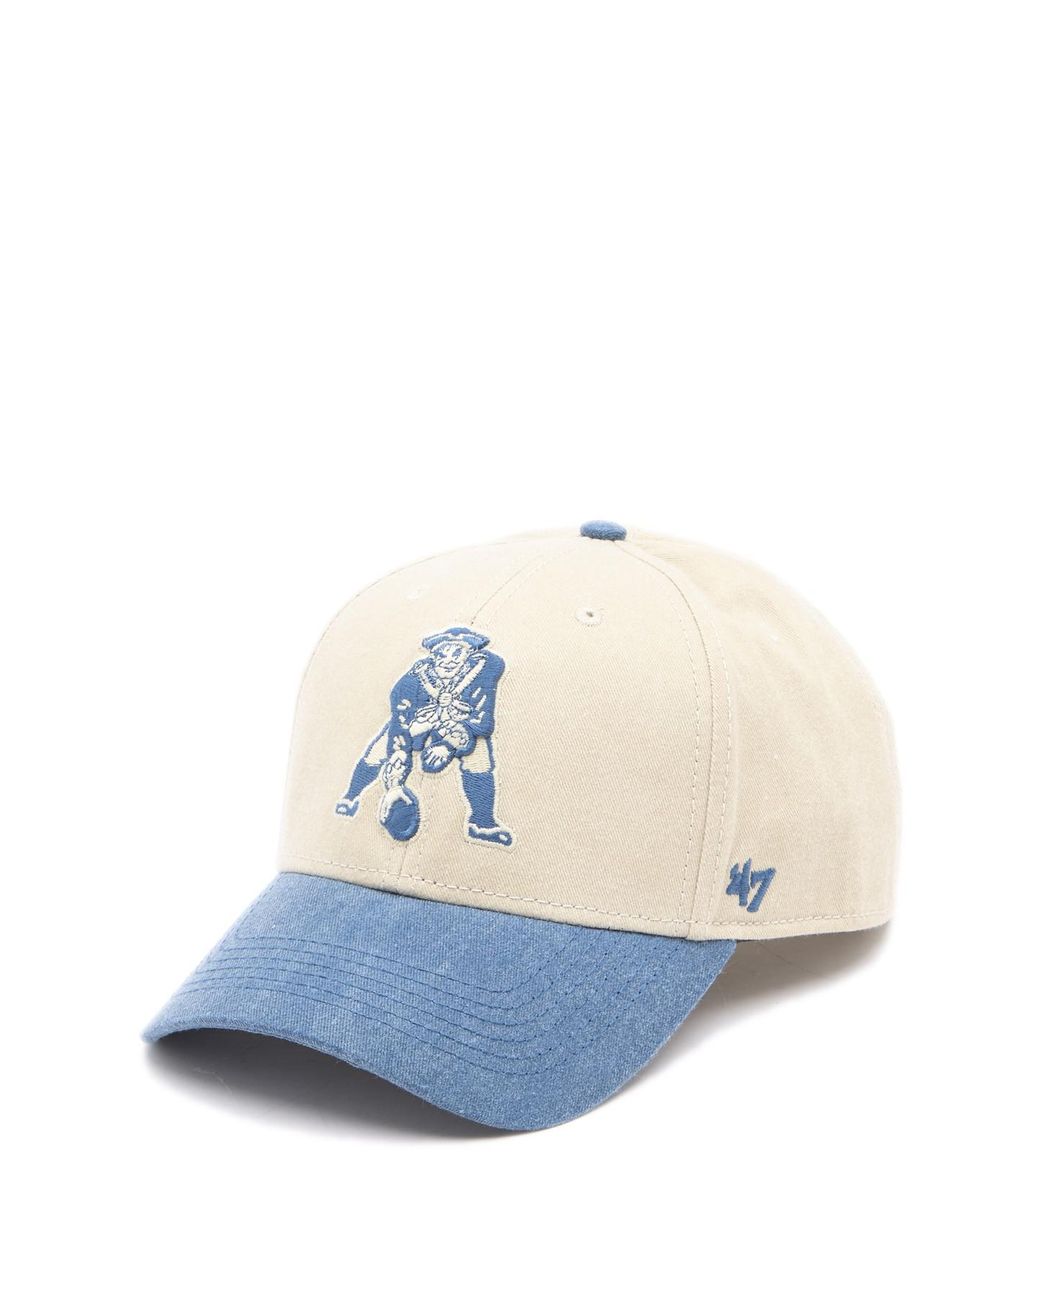 47 Brand Nfl Fieldview Mvp Patriots Hat for Men